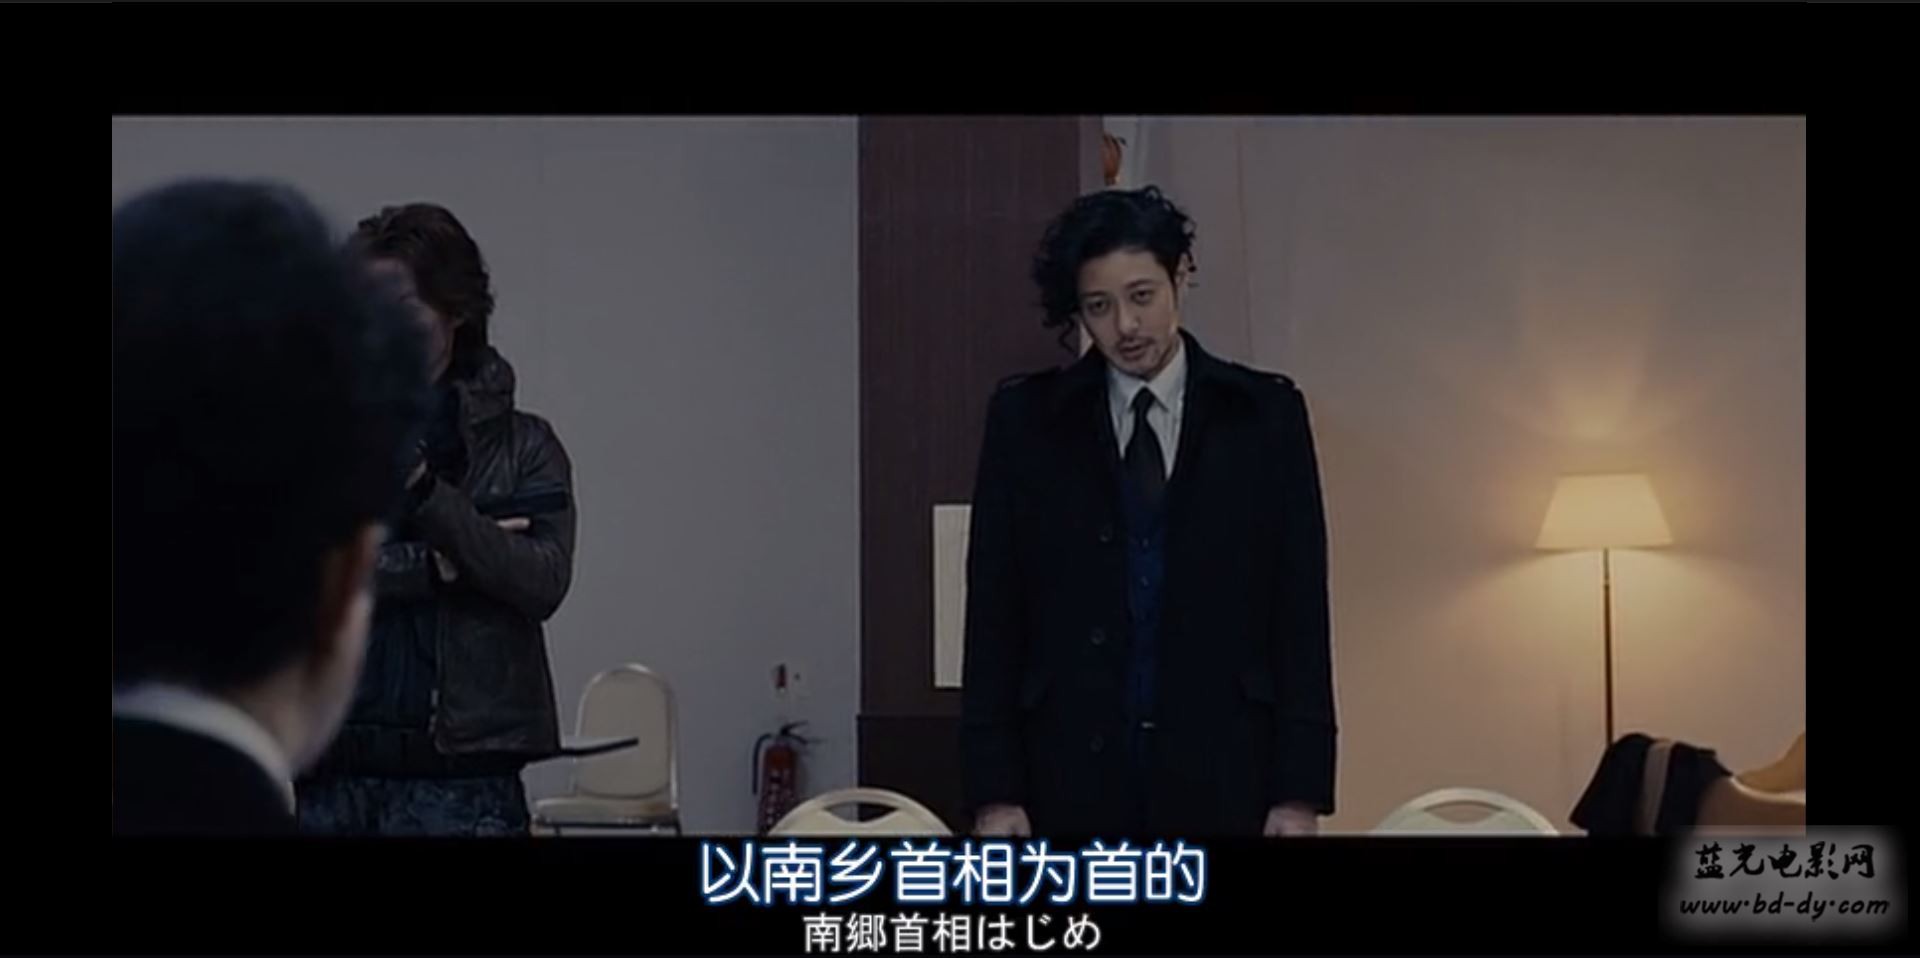 《S-最后的警官 电影版》2015日本动作犯罪.DVD.中日双字截图;jsessionid=uQwRFrFYoywDEZ48vpaHVicj_aCCVx5zlH8A1rpY